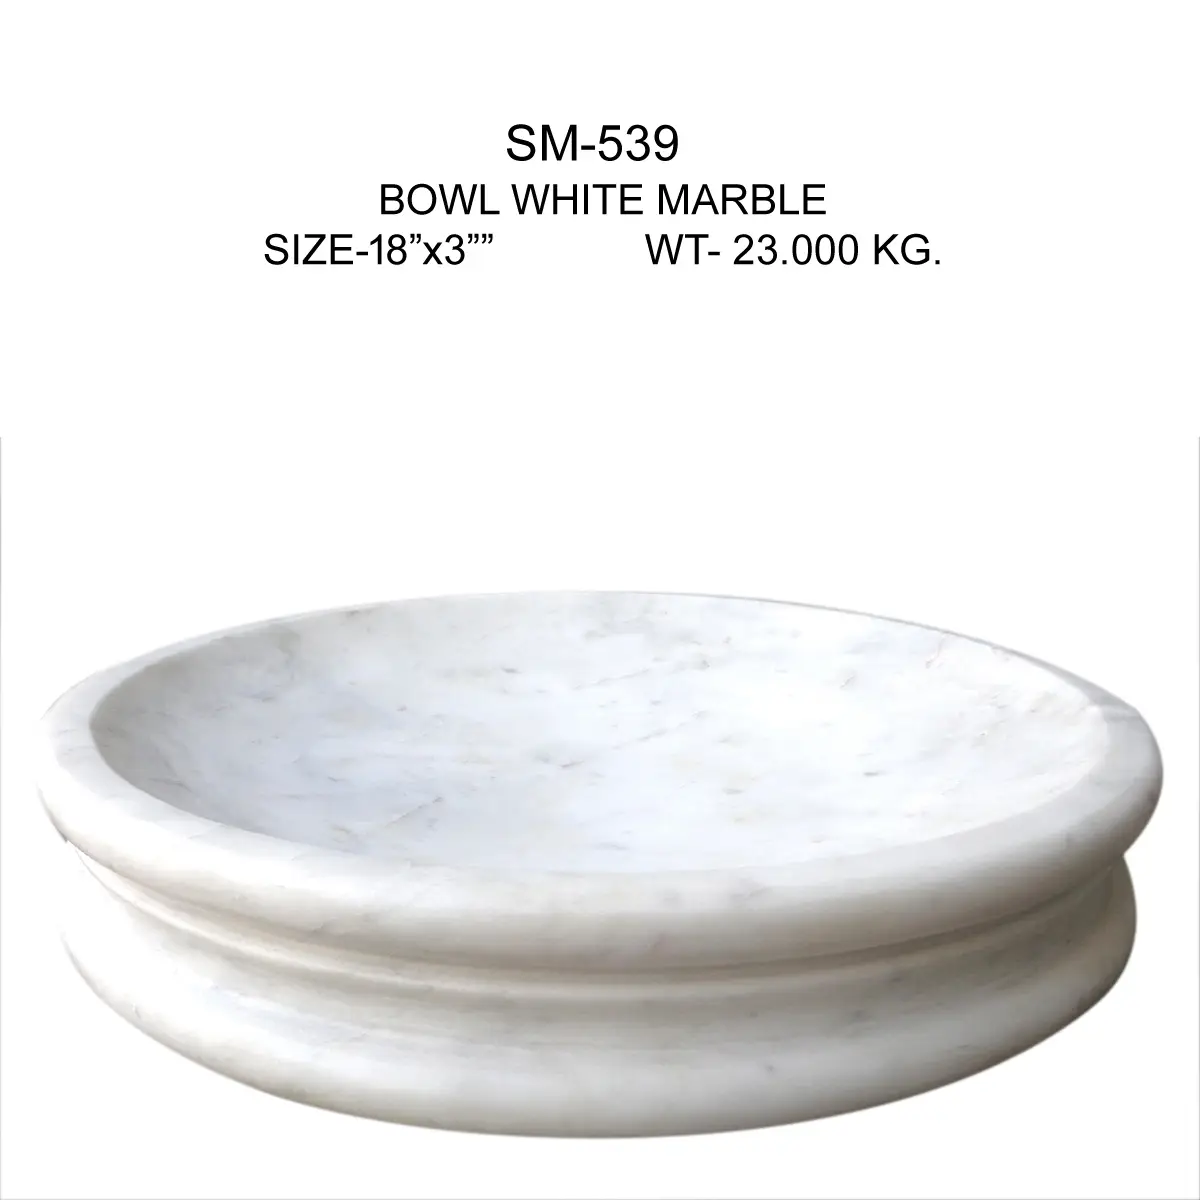 WHITE MARBLE BOWL STYLE-1 LARGE